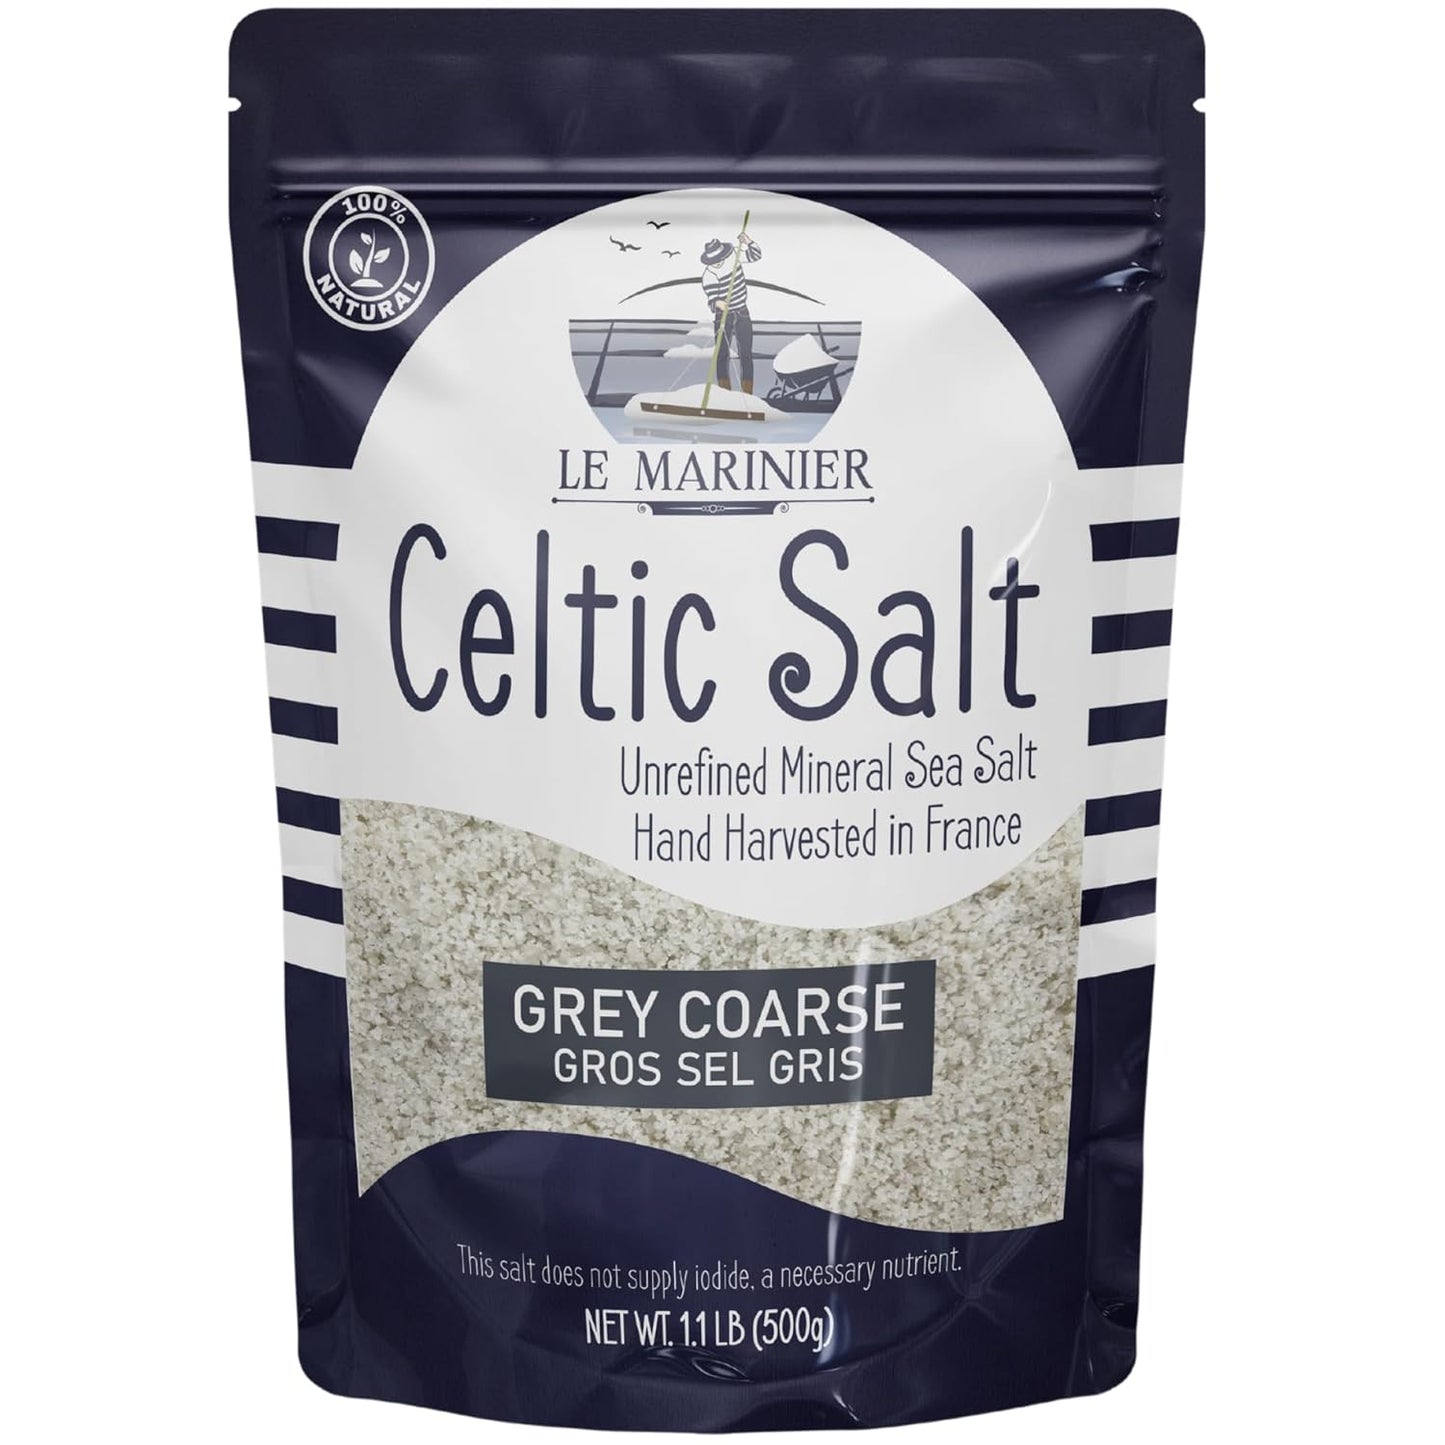 Le Marinier Celtic Salt Grey Coarse - 1.1lb / 500g